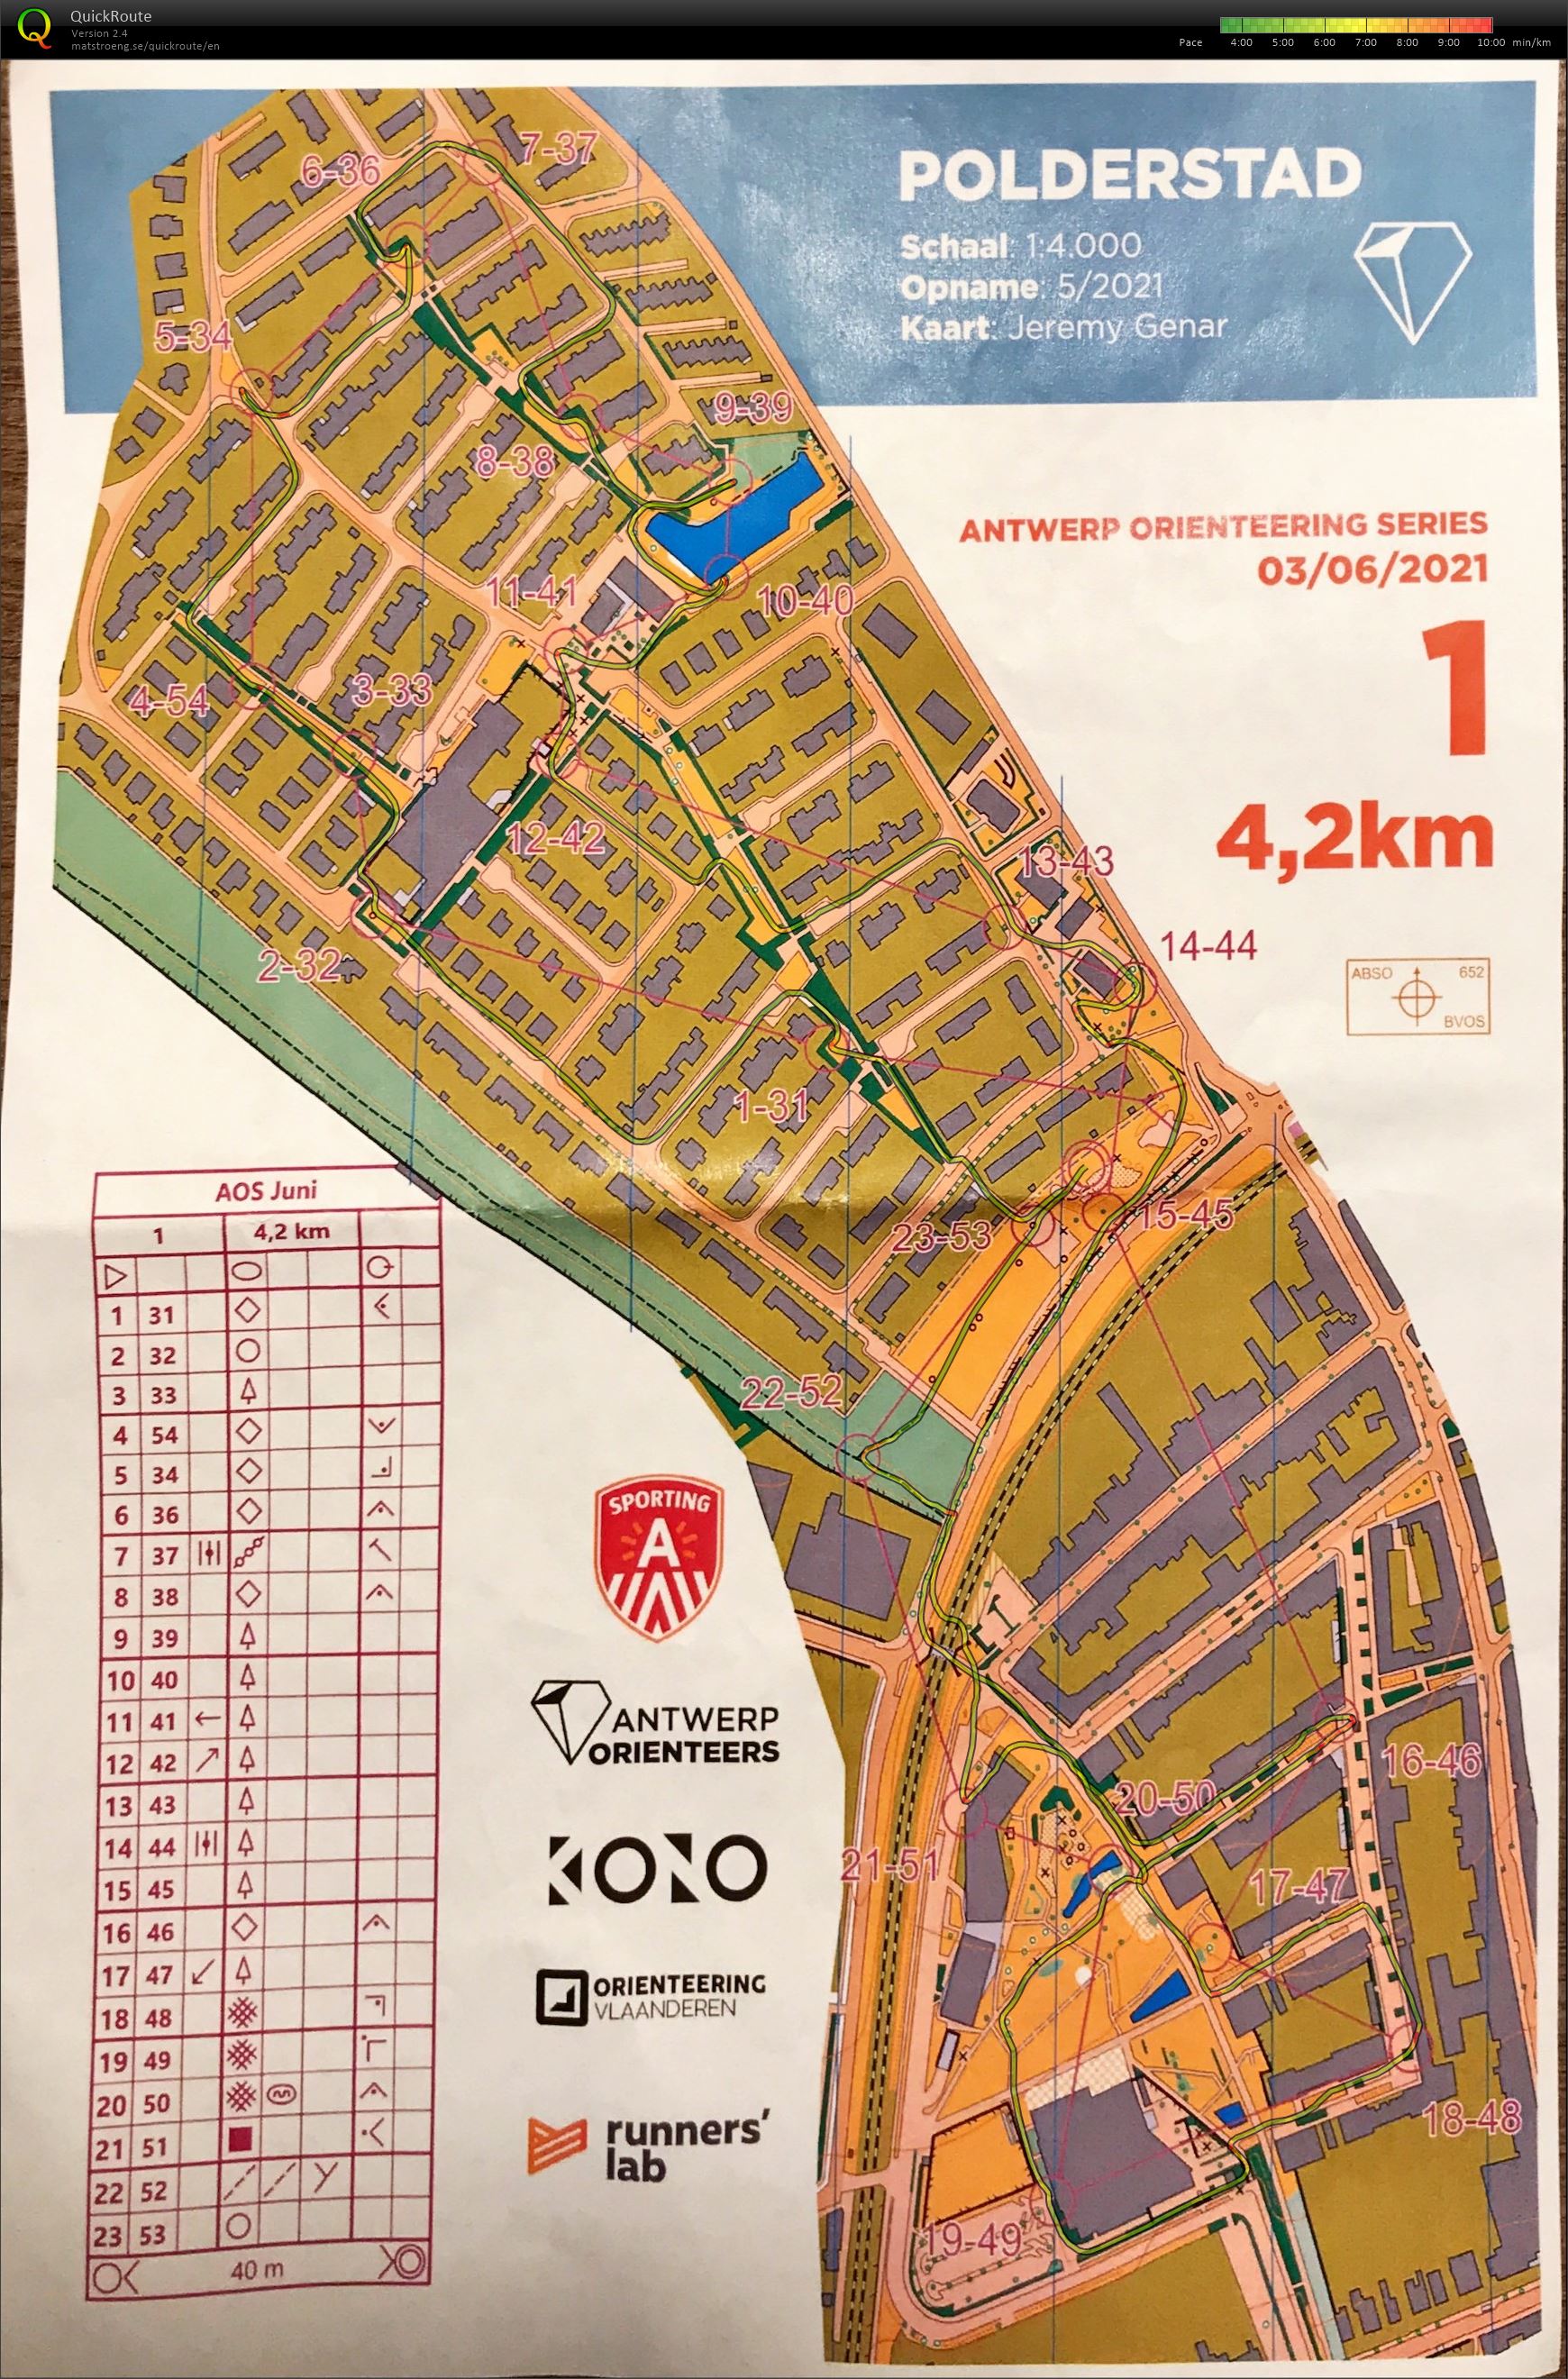 Antwerp Orienteering Series - Polderstad - 4.2K (2021-06-03)